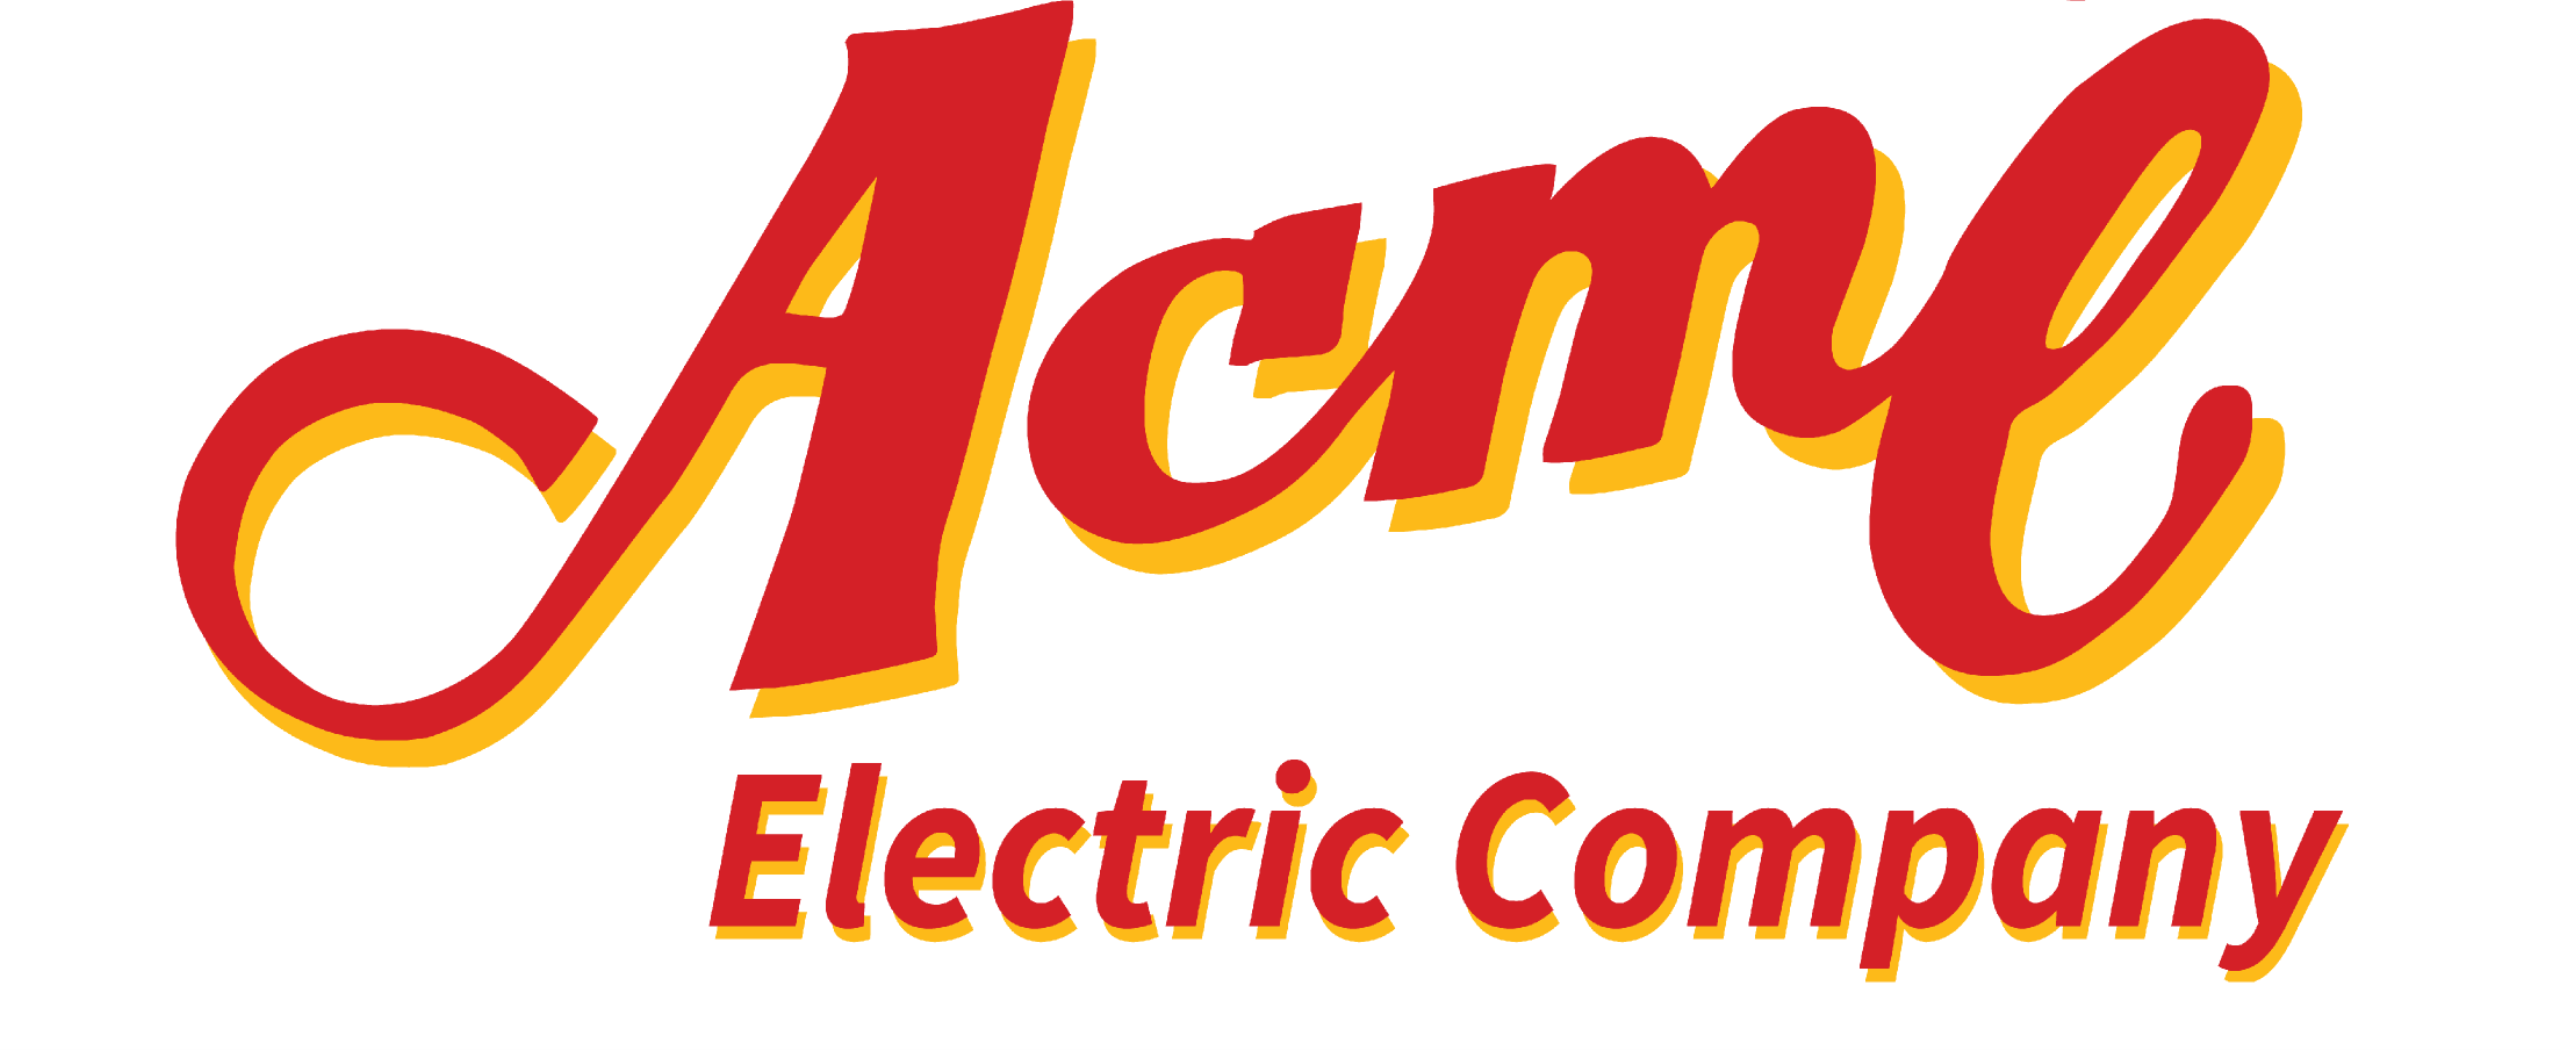 Acme Electric Company Logo